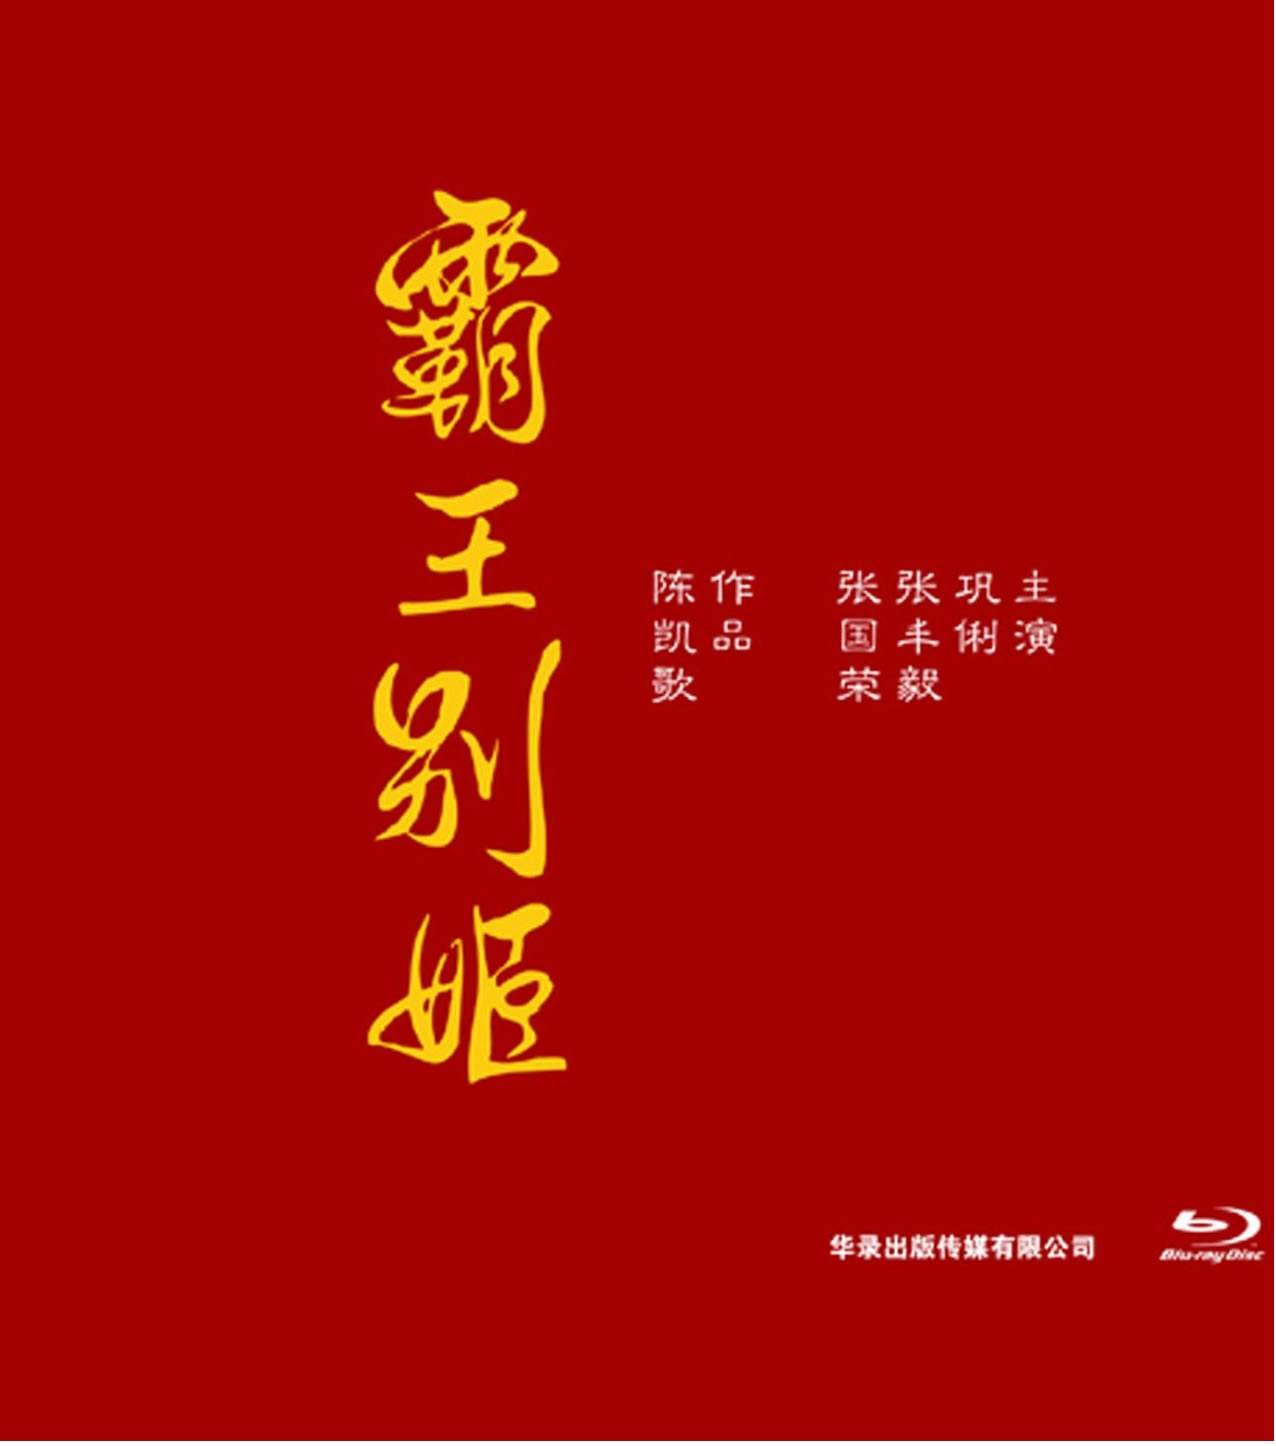 Ba wang bie ji (Farewell My Concubine) (Blu-ray Disc)<br>ISBN:978-7-88763-174-9, 9787887631749